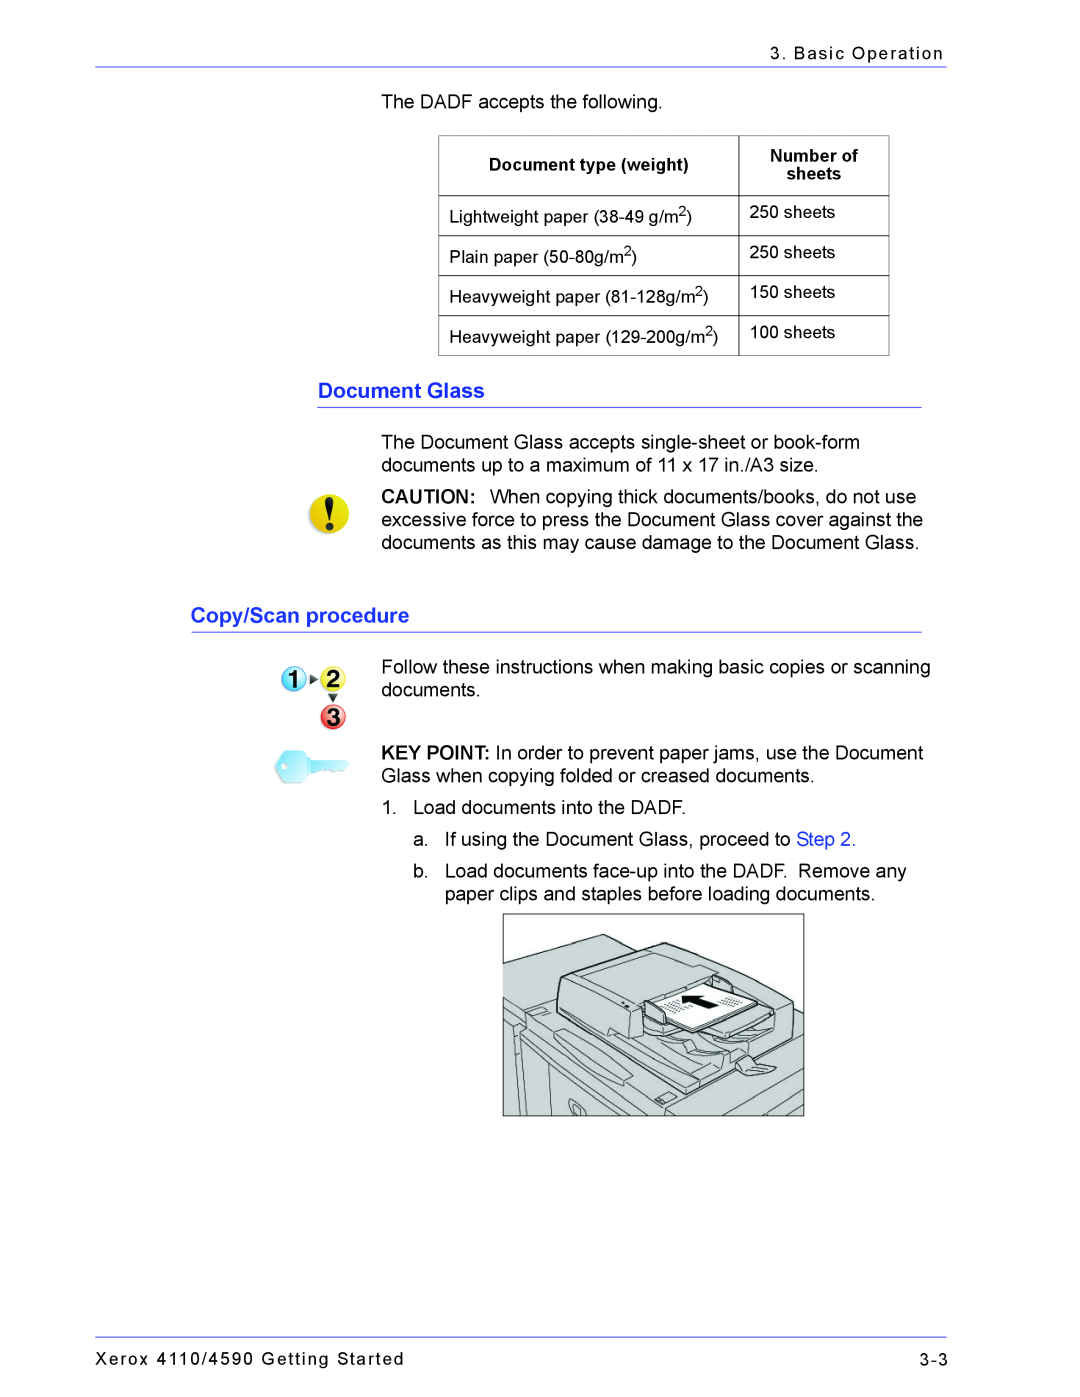 Xerox 4110, 4590 manual Document Glass, Copy/Scan procedure 